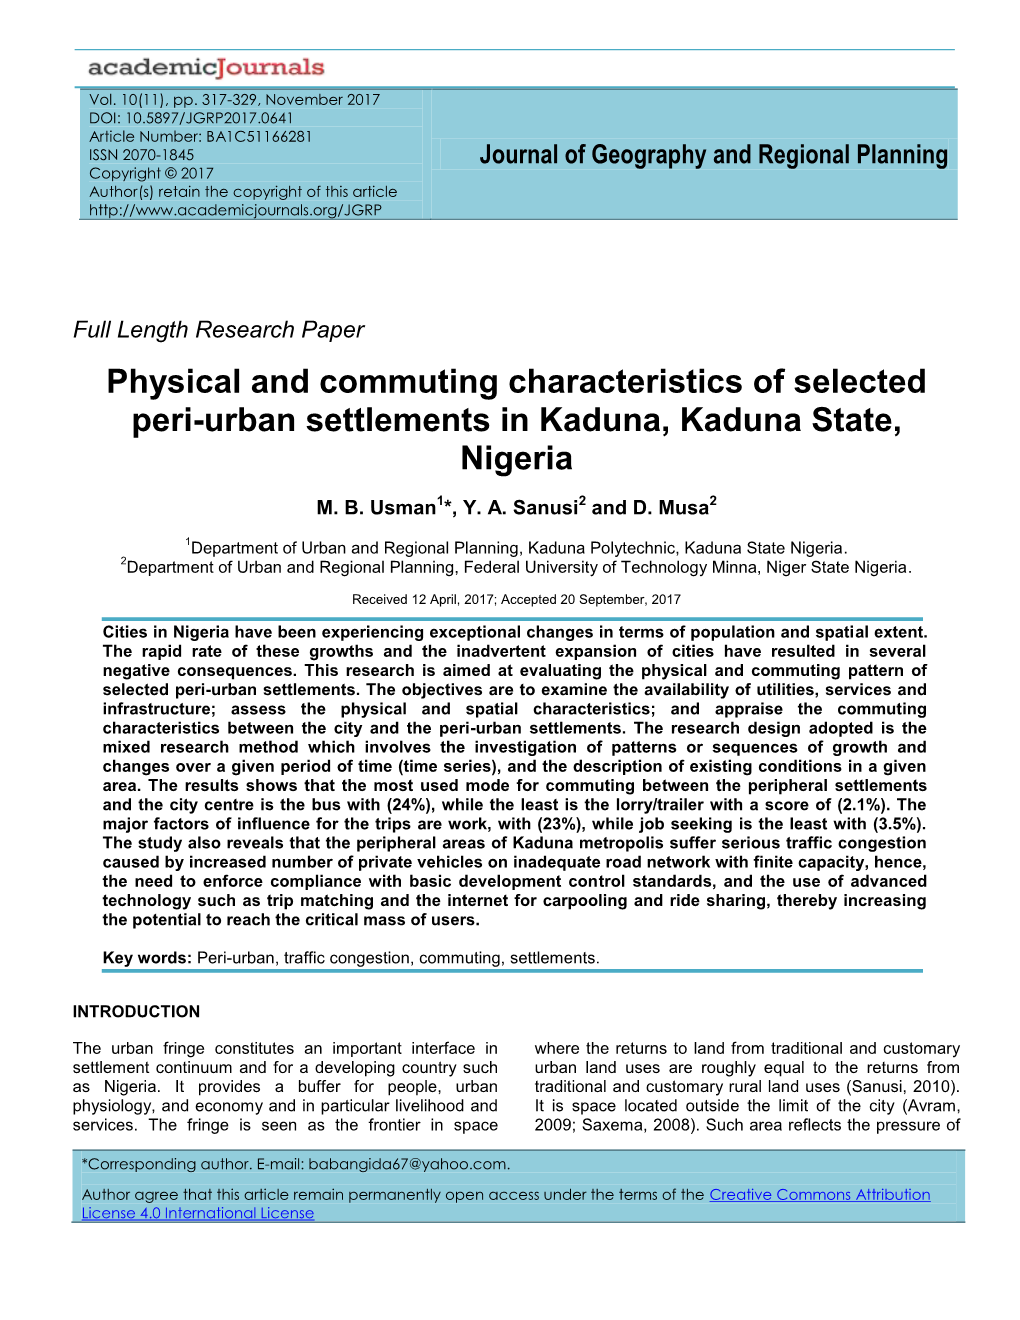 Physical and Commuting Characteristics of Selected Peri-Urban Settlements in Kaduna, Kaduna State, Nigeria